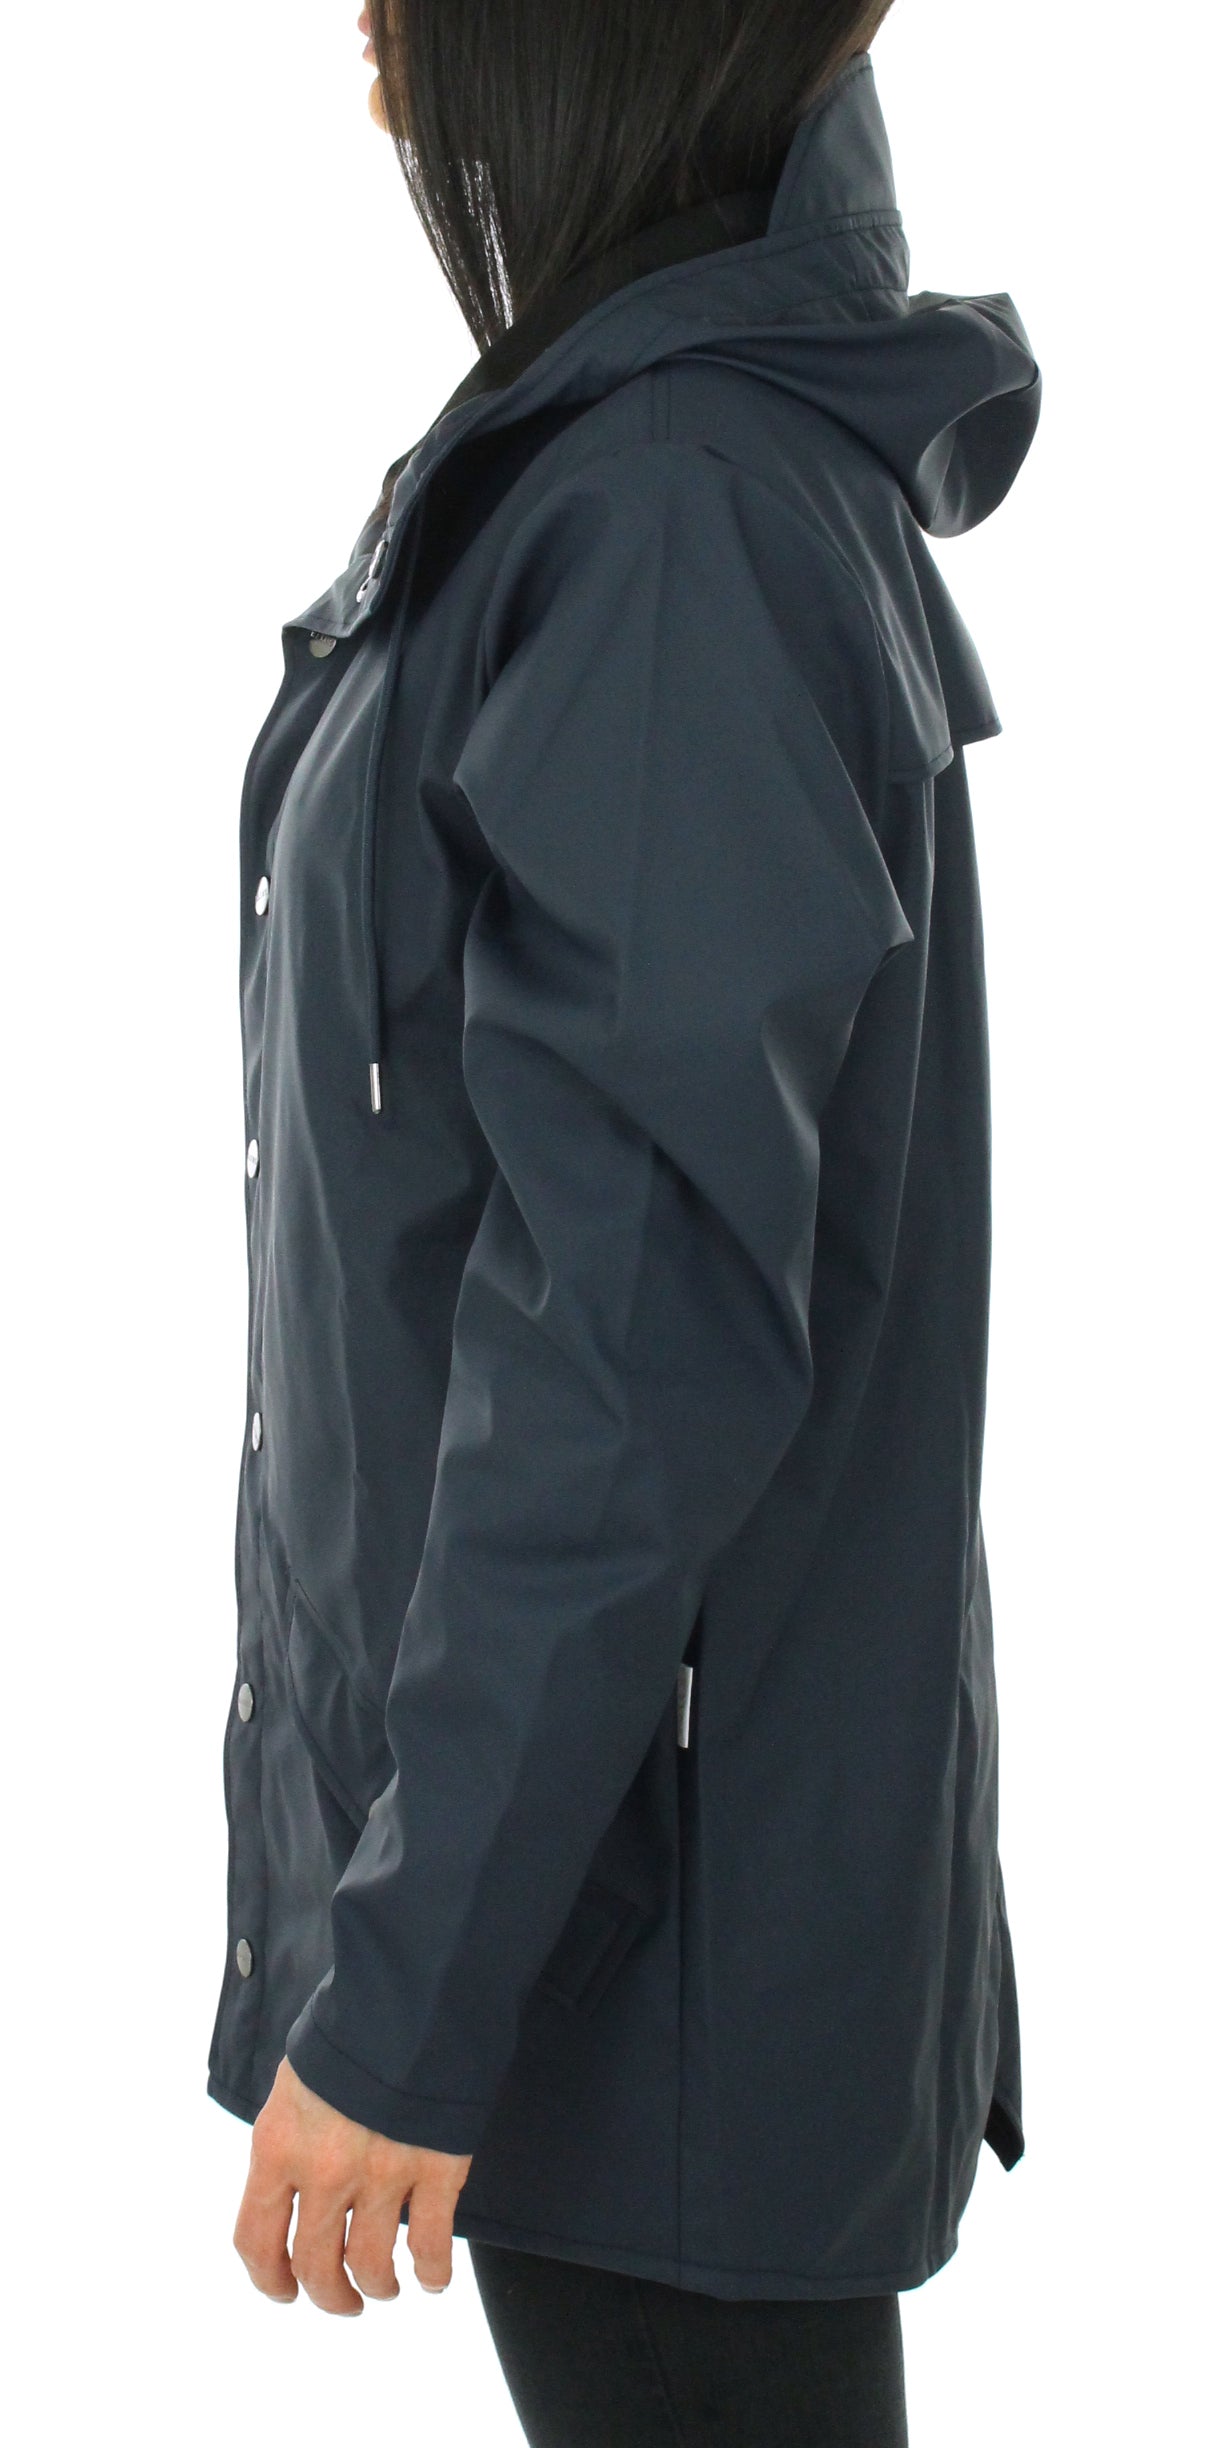 Waterproof Jacket Unisex 1201 blue